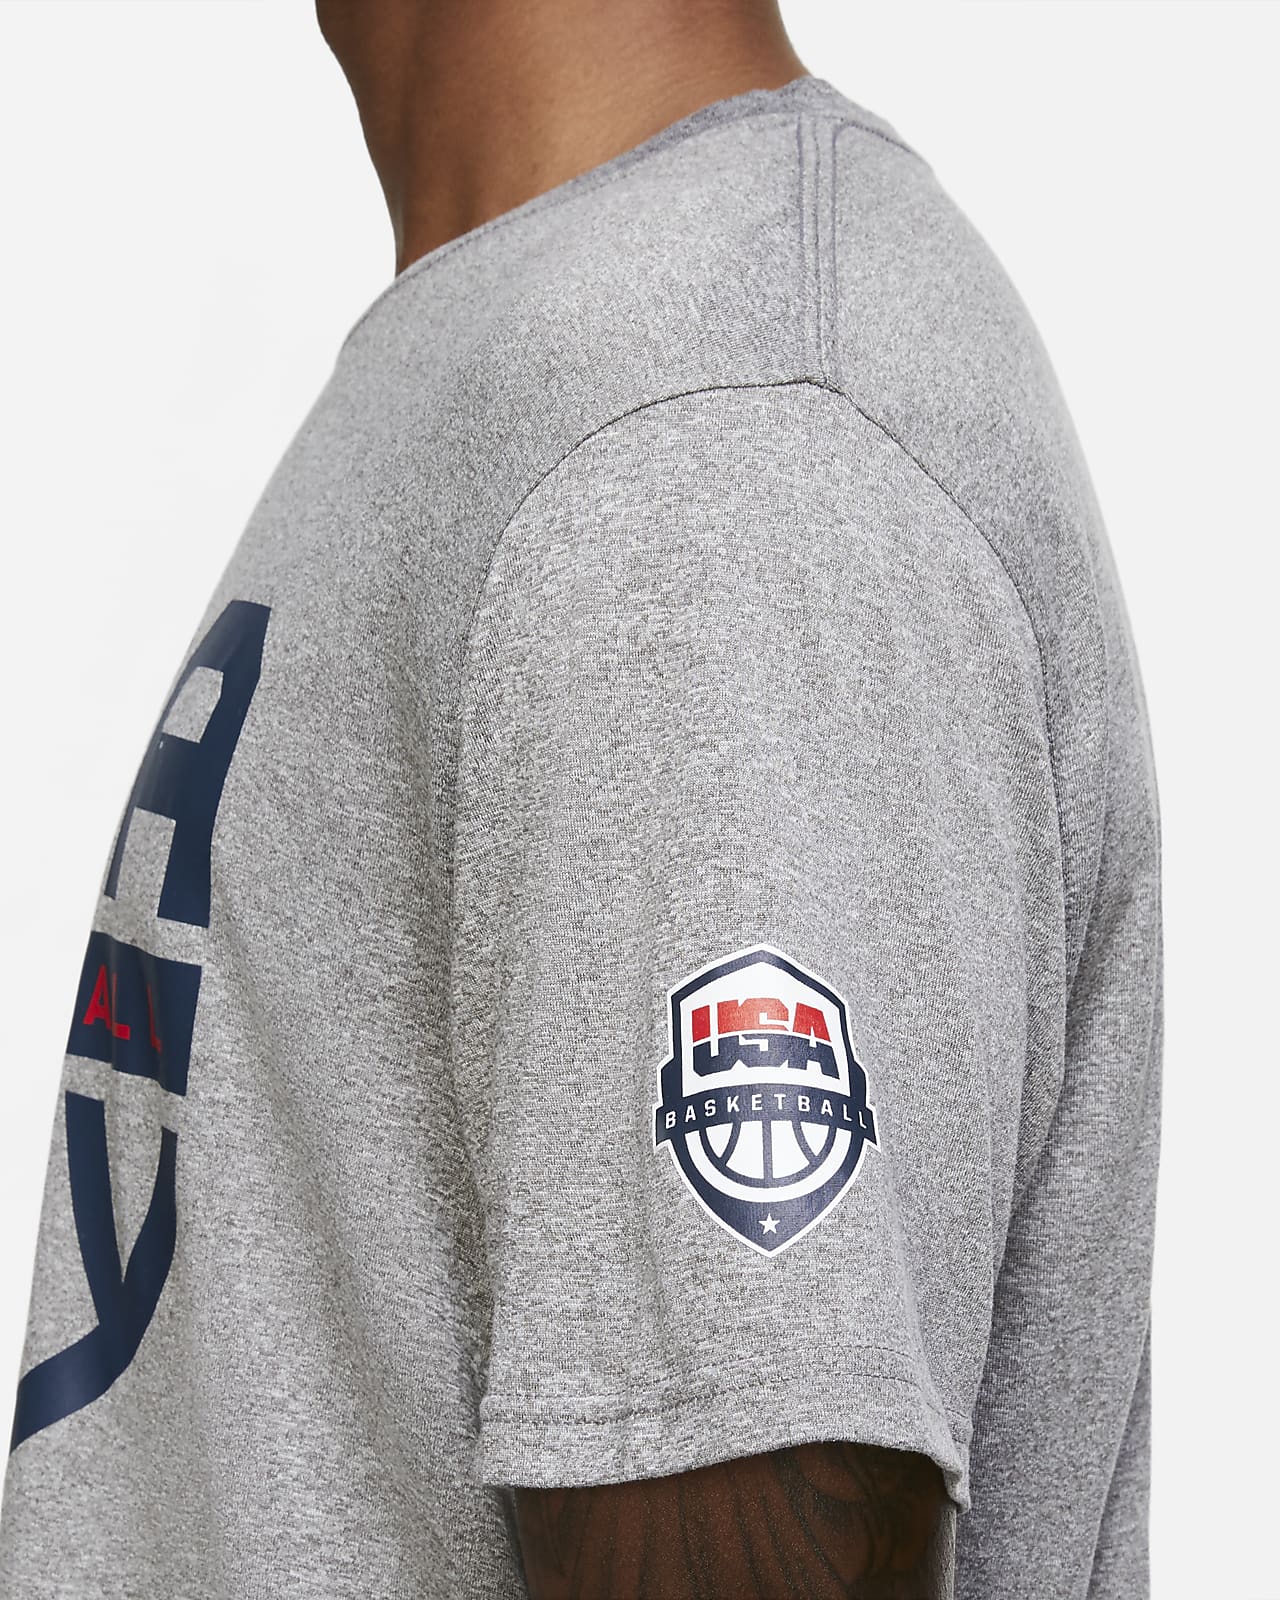 USAB ナイキ Dri-FIT メンズ バスケットボール プラクティス Tシャツ